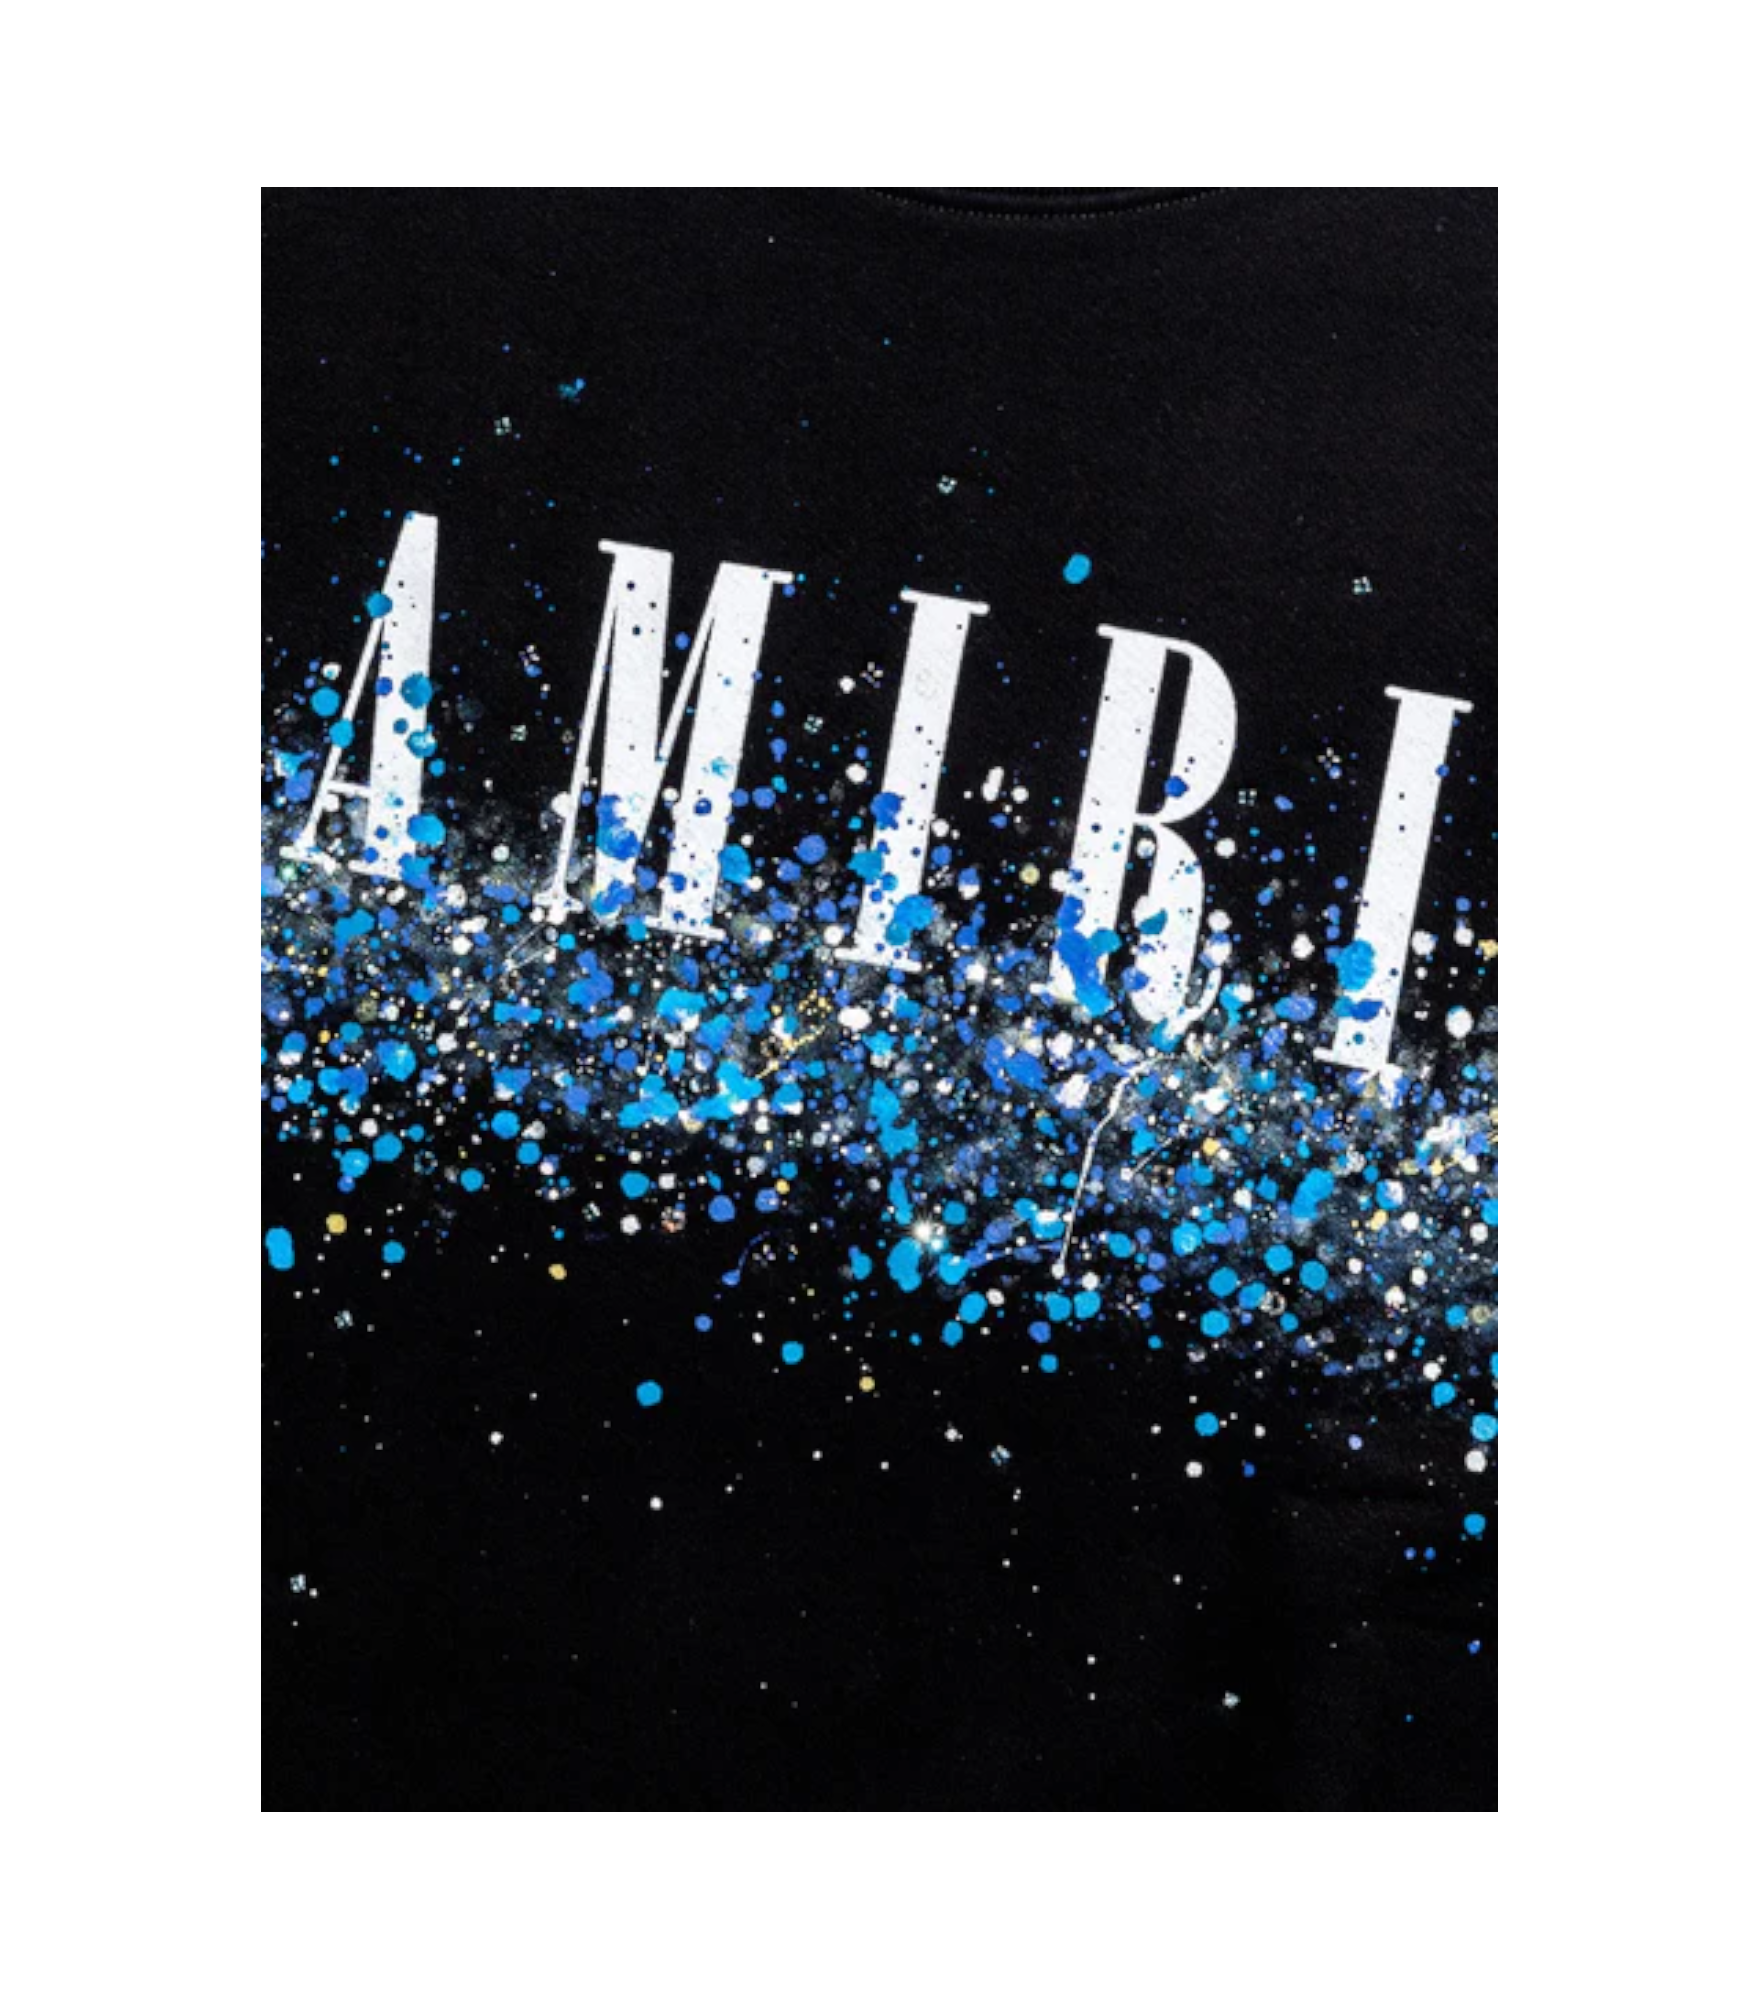 AMIRI Black Crystal Core Logo Painter T-Shirt Amiri